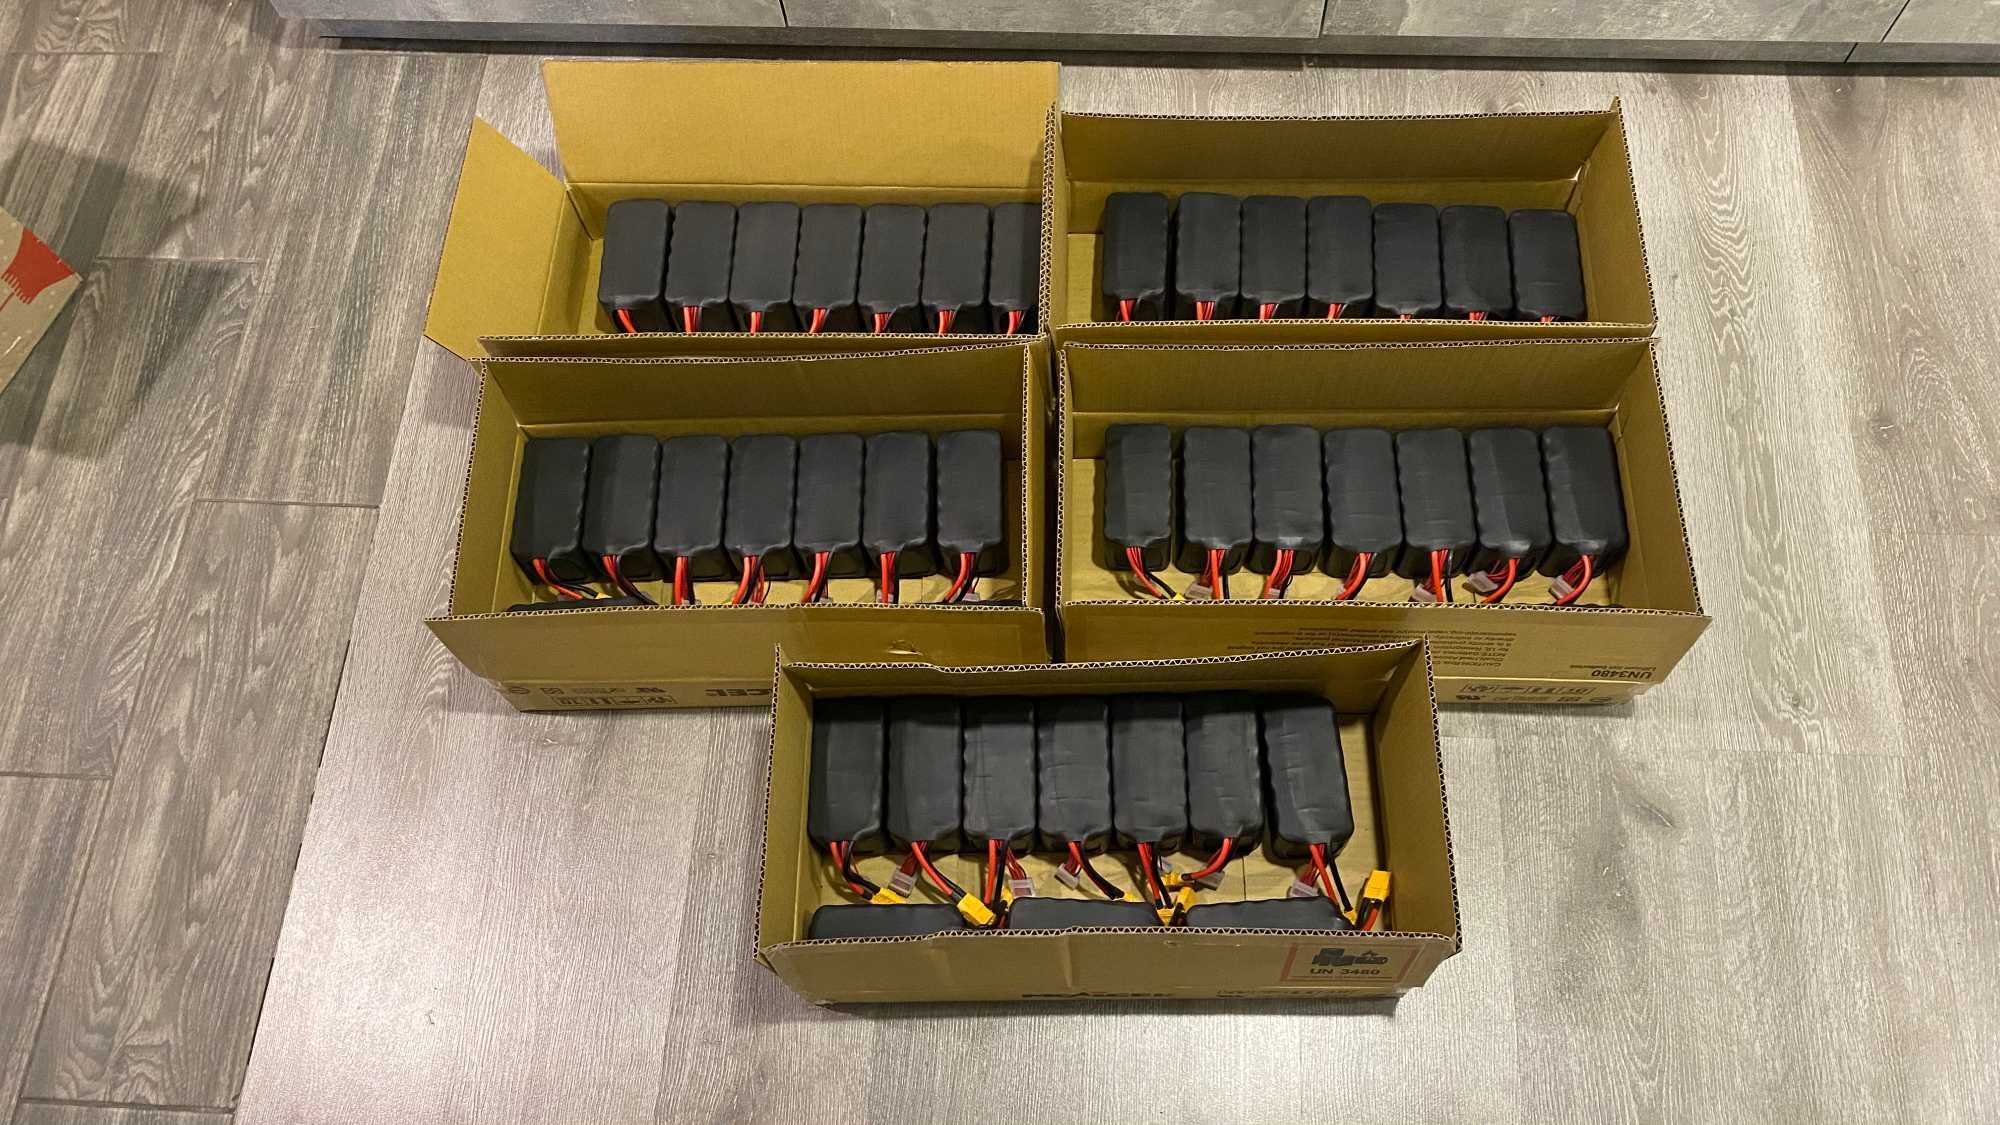 ОПТ 6s2p / 6s1p 21700 батареи для FPV (ФПВ) дронов